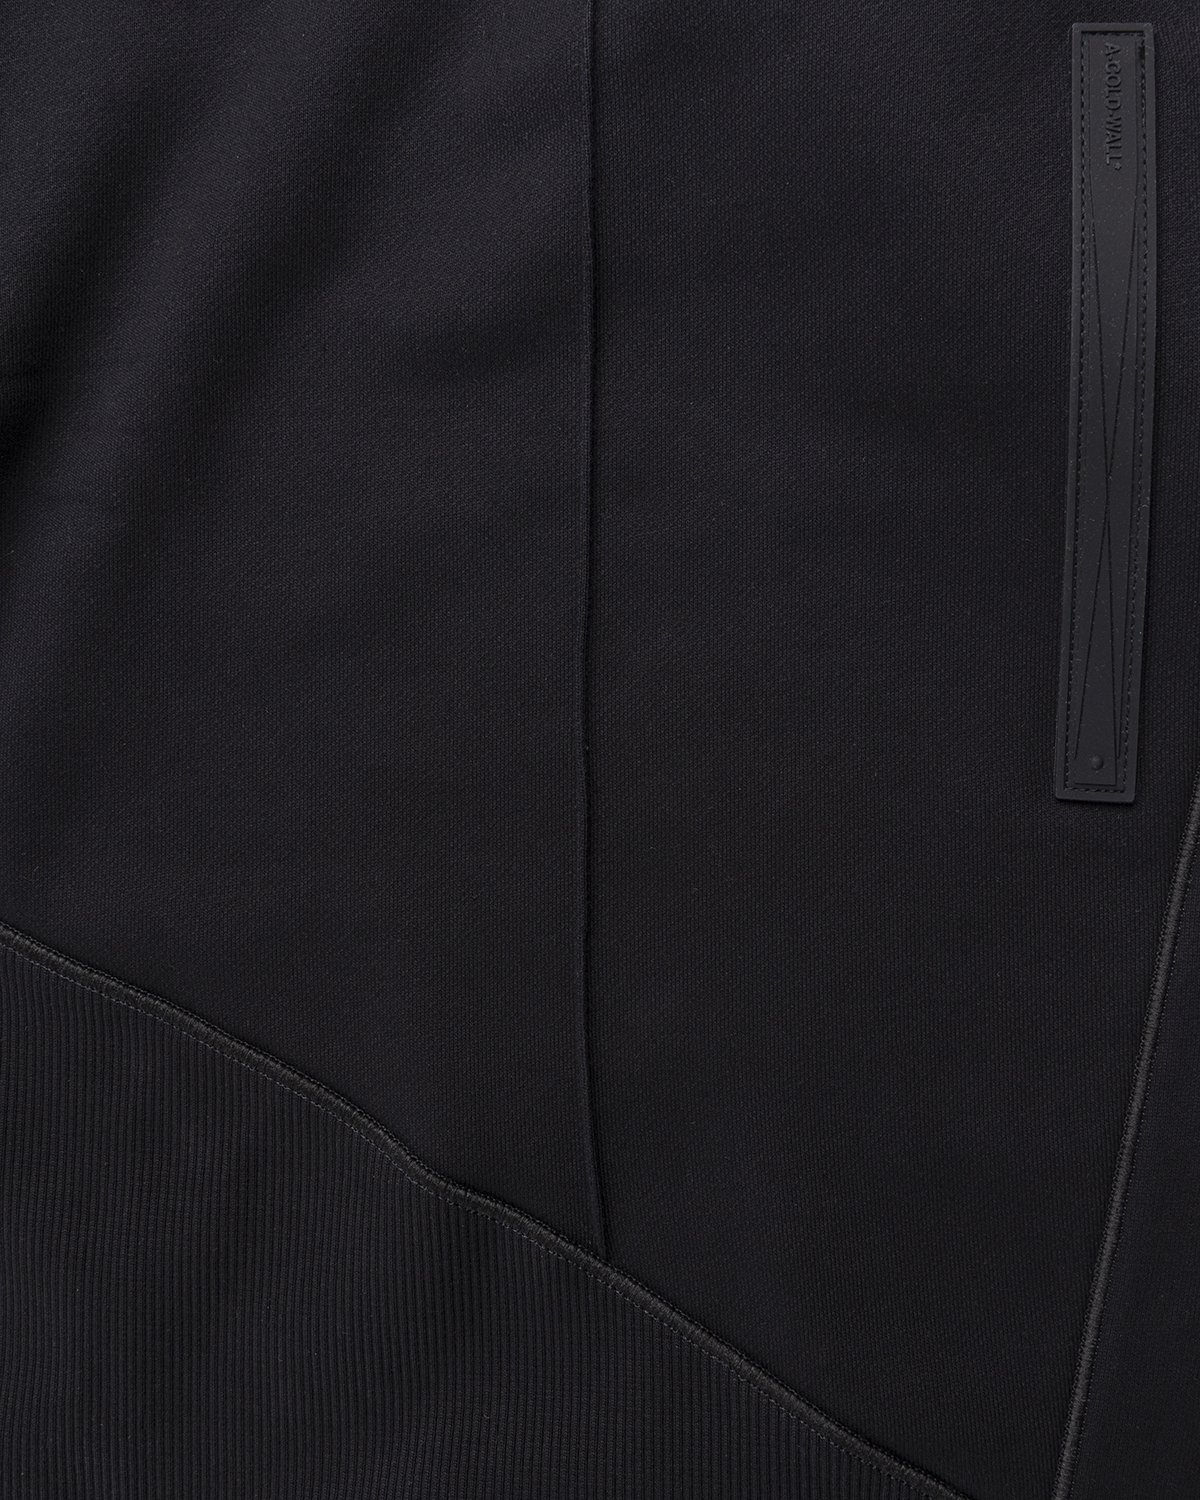 A-Cold-Wall* - Granular Sweatpants Black - Clothing - Black - Image 6